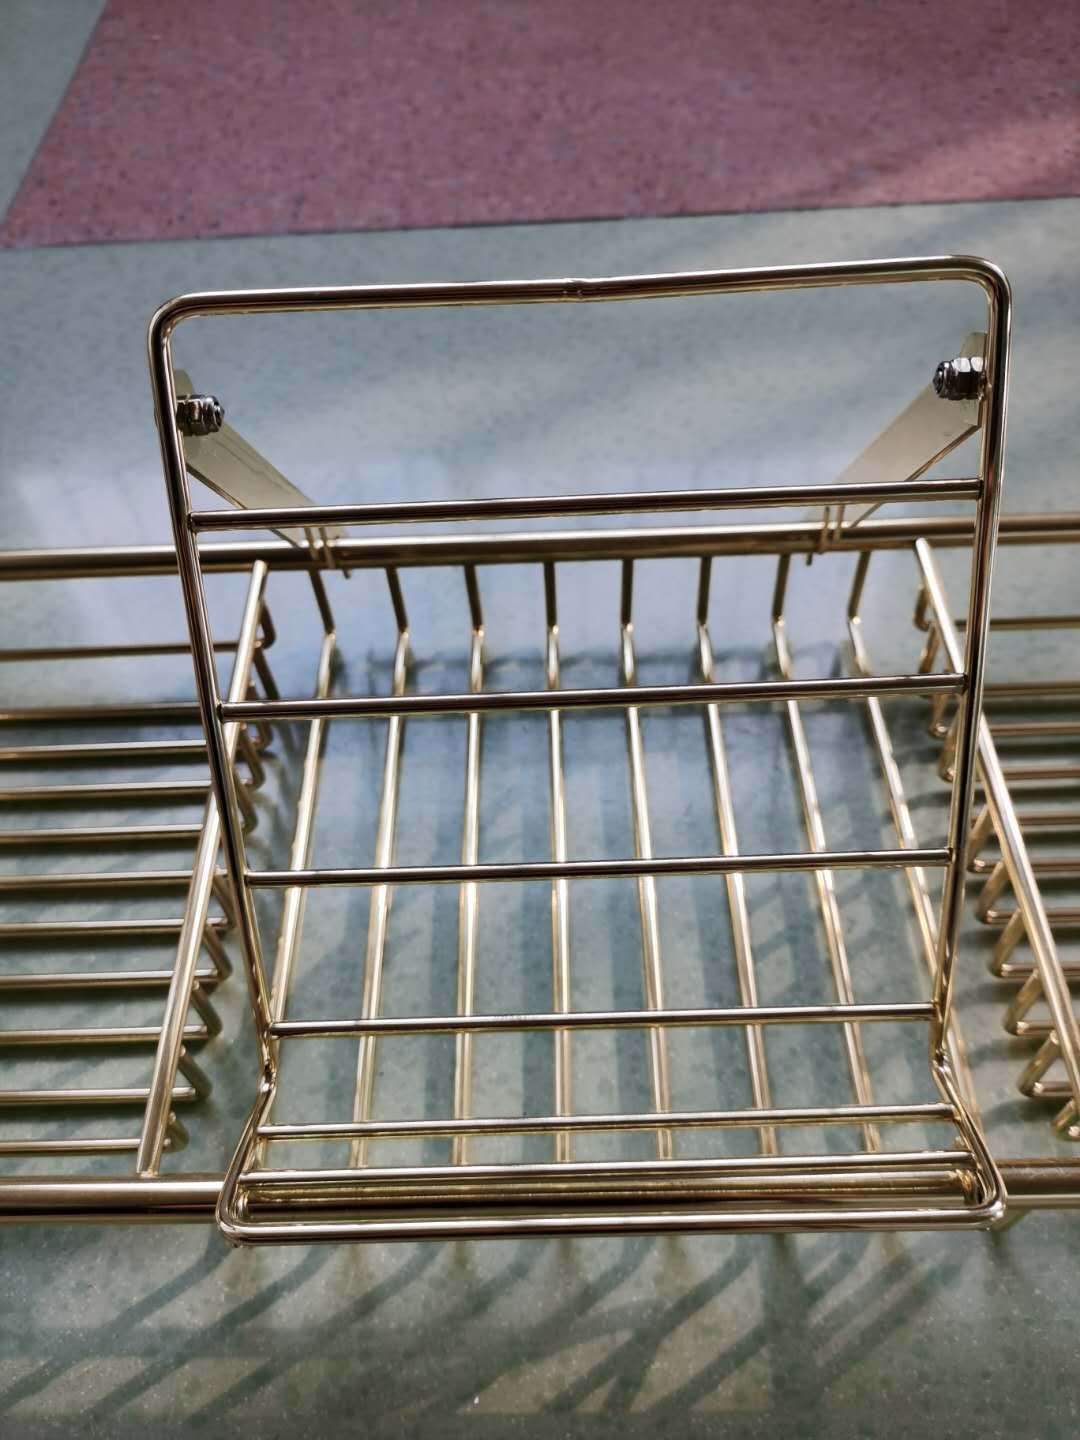 Stainless Steel Bathtub Rack